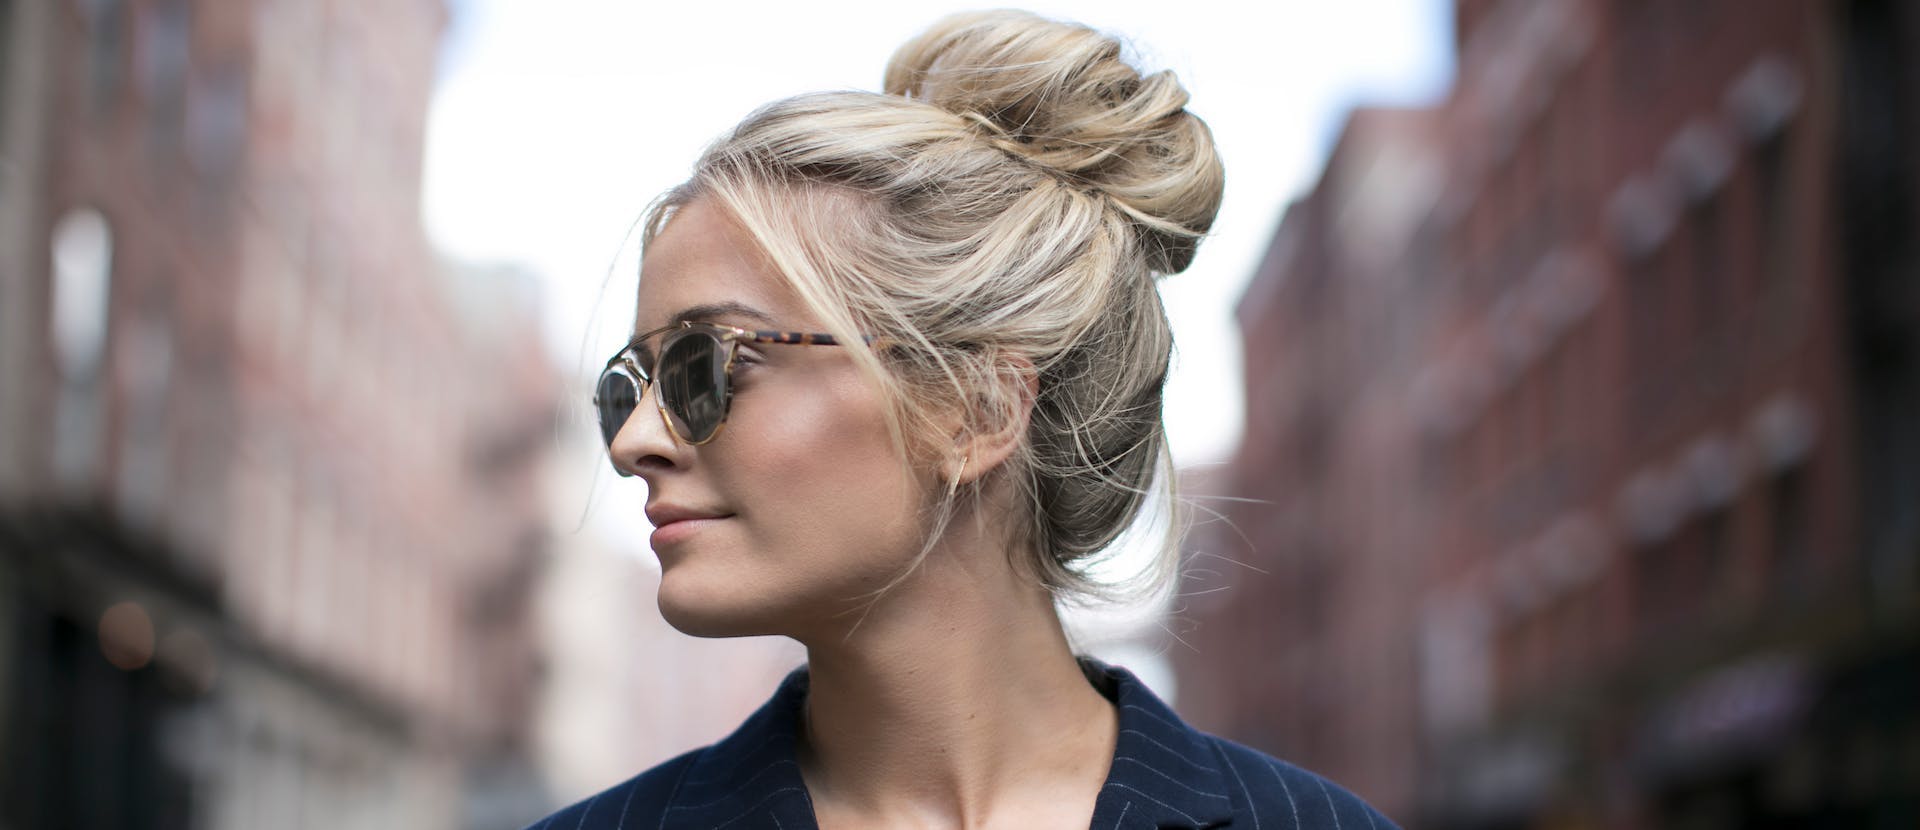 person accessories sunglasses girl kid woman blonde female teen hair